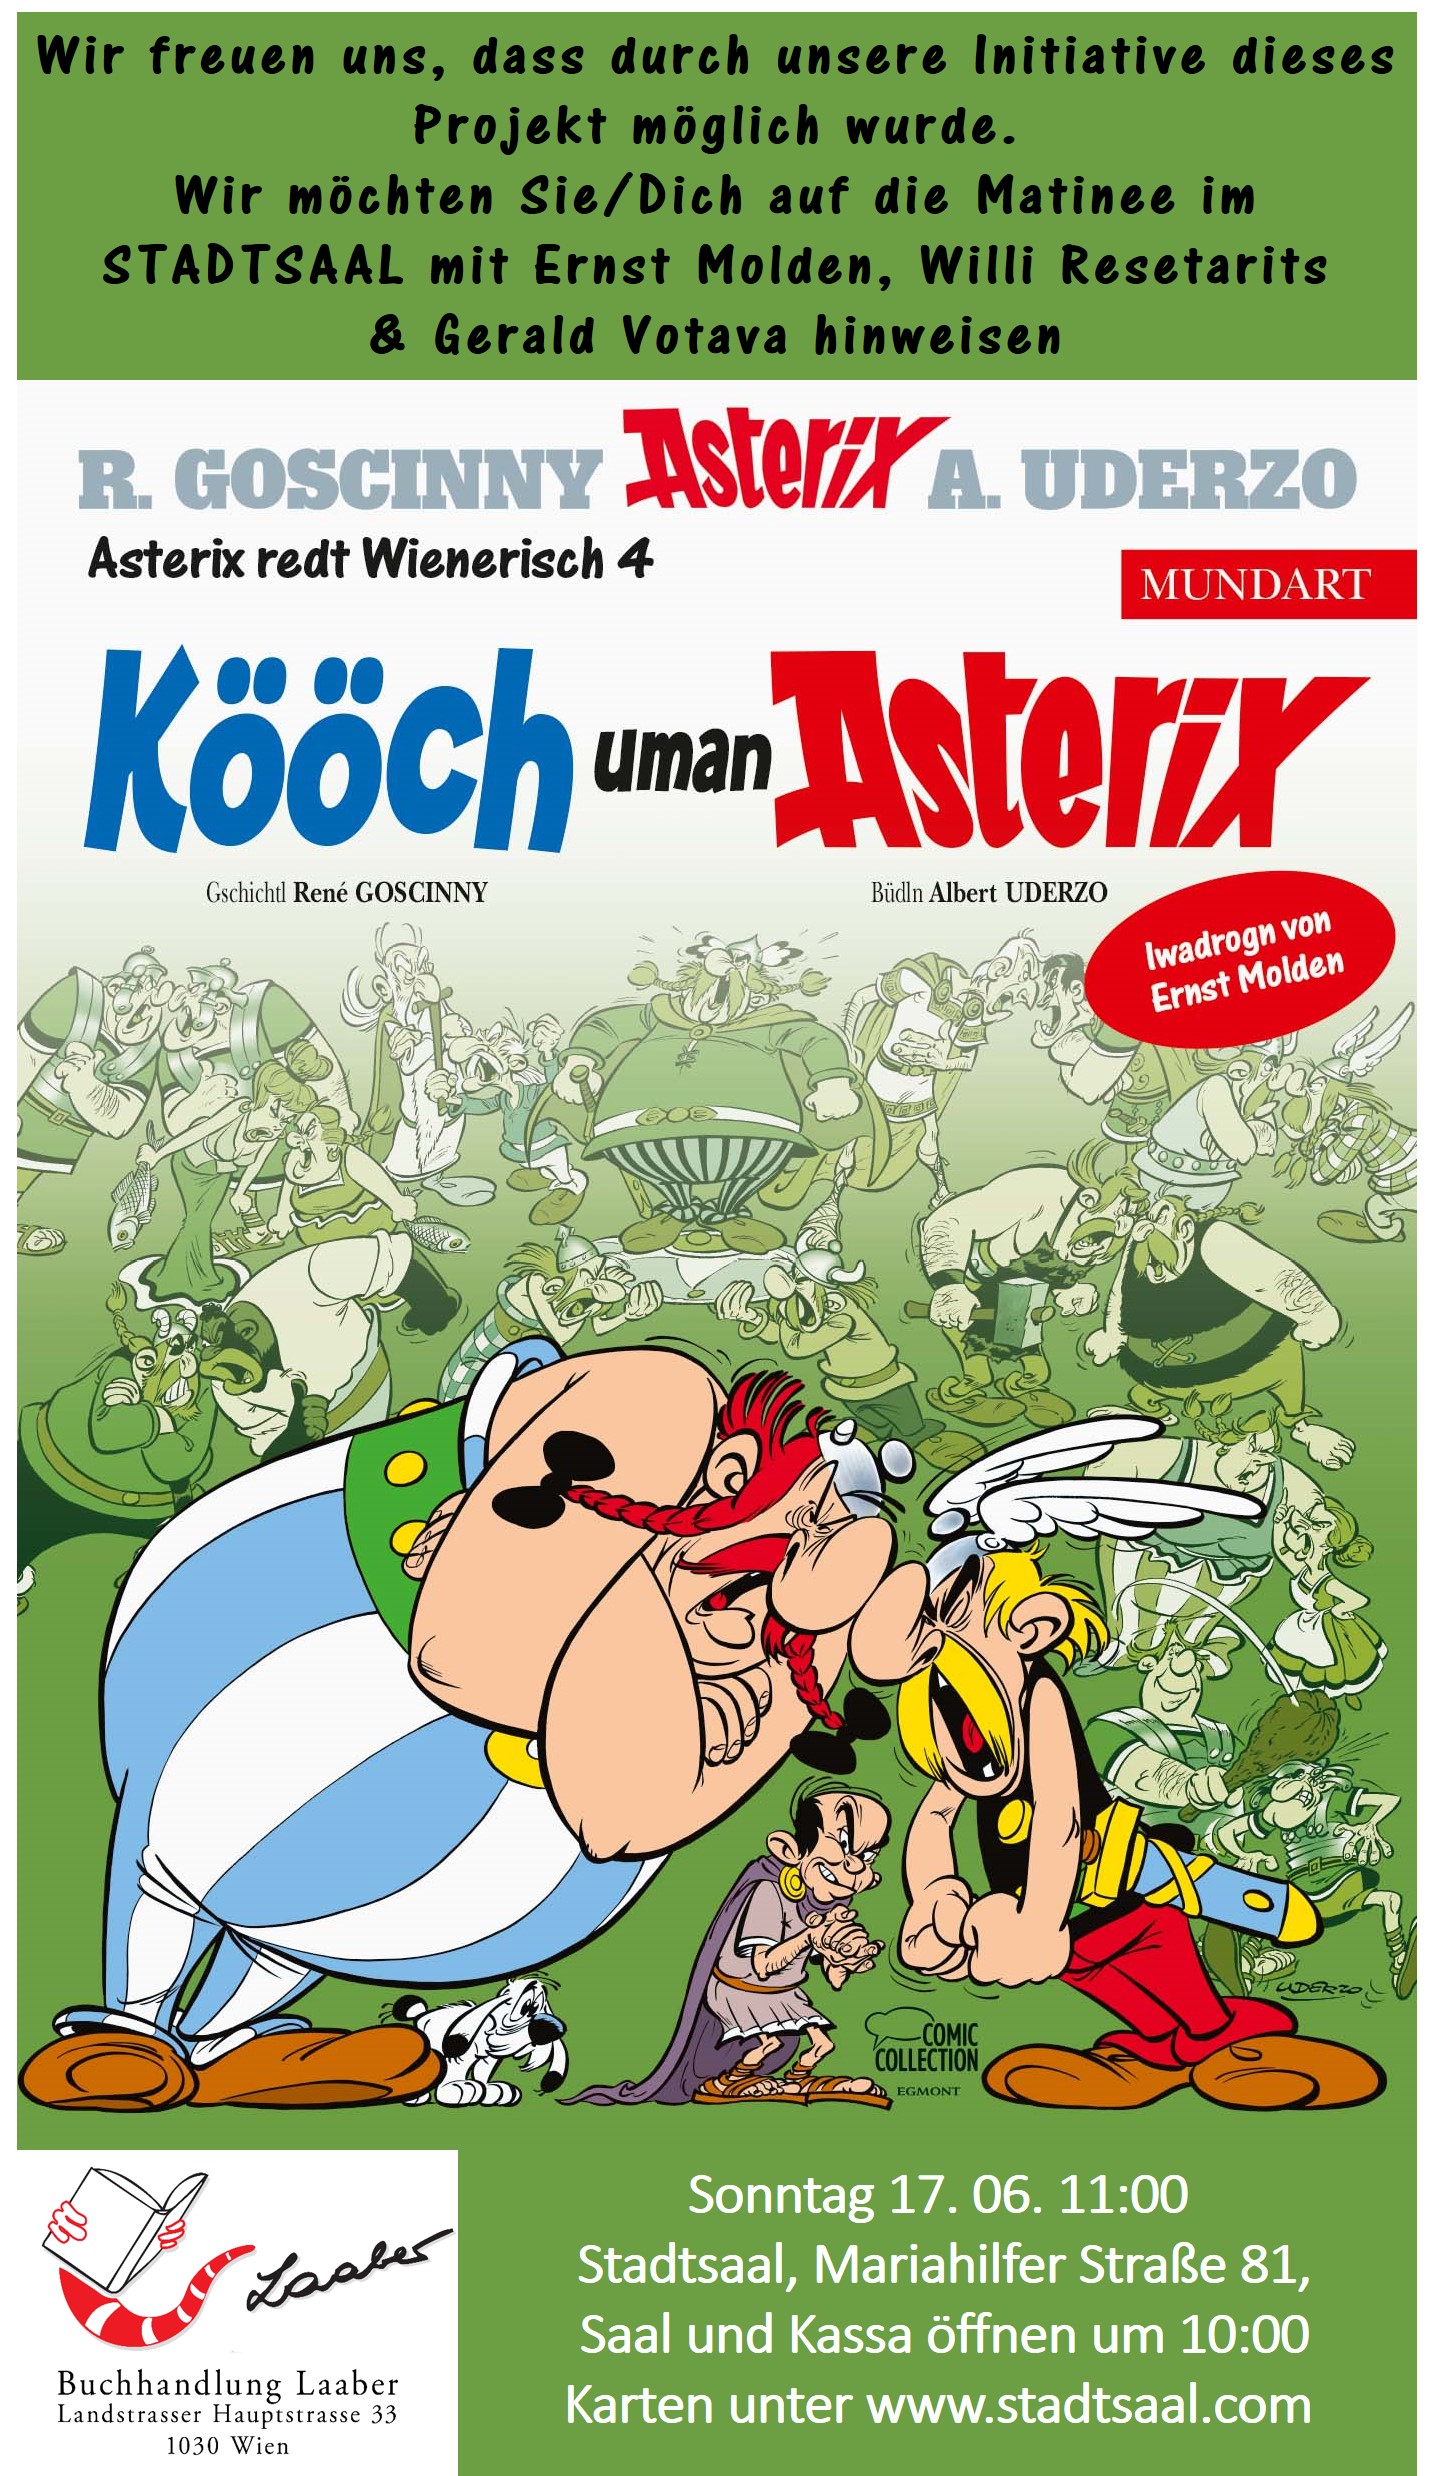 Asterix neu.jpg